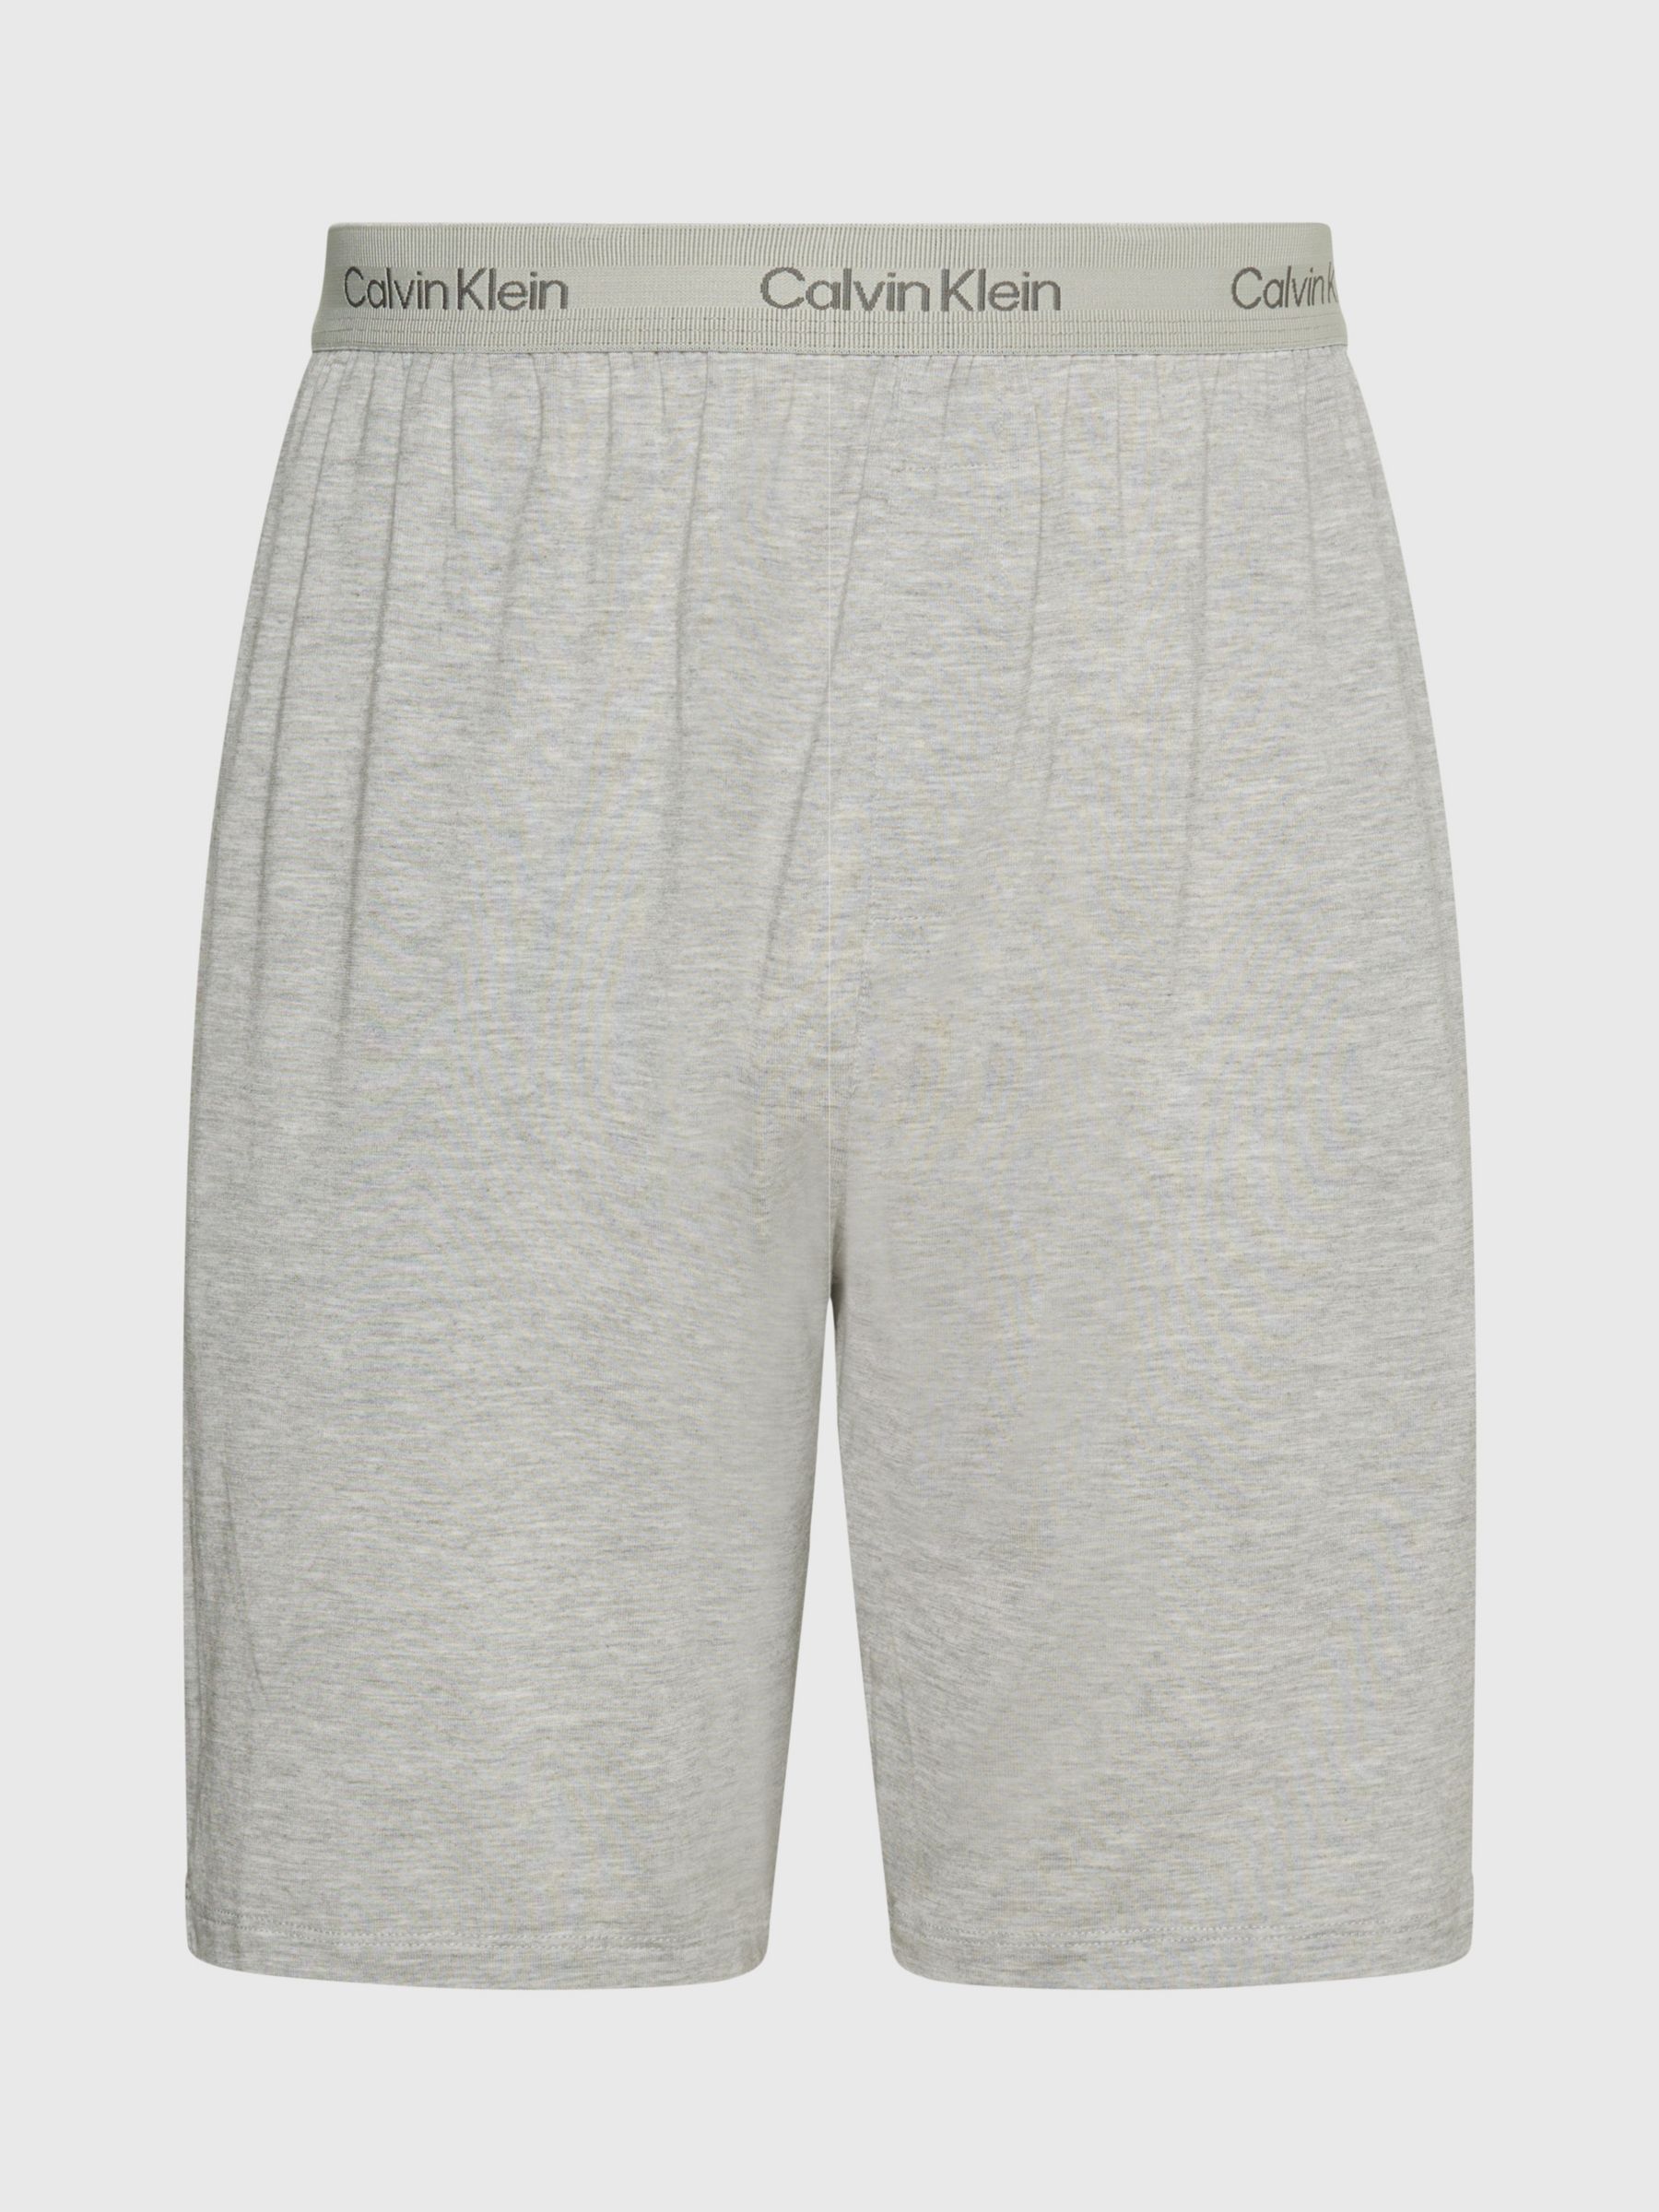 Calvin Klein Ultra Soft Modern Lounge Shorts, Grey, L